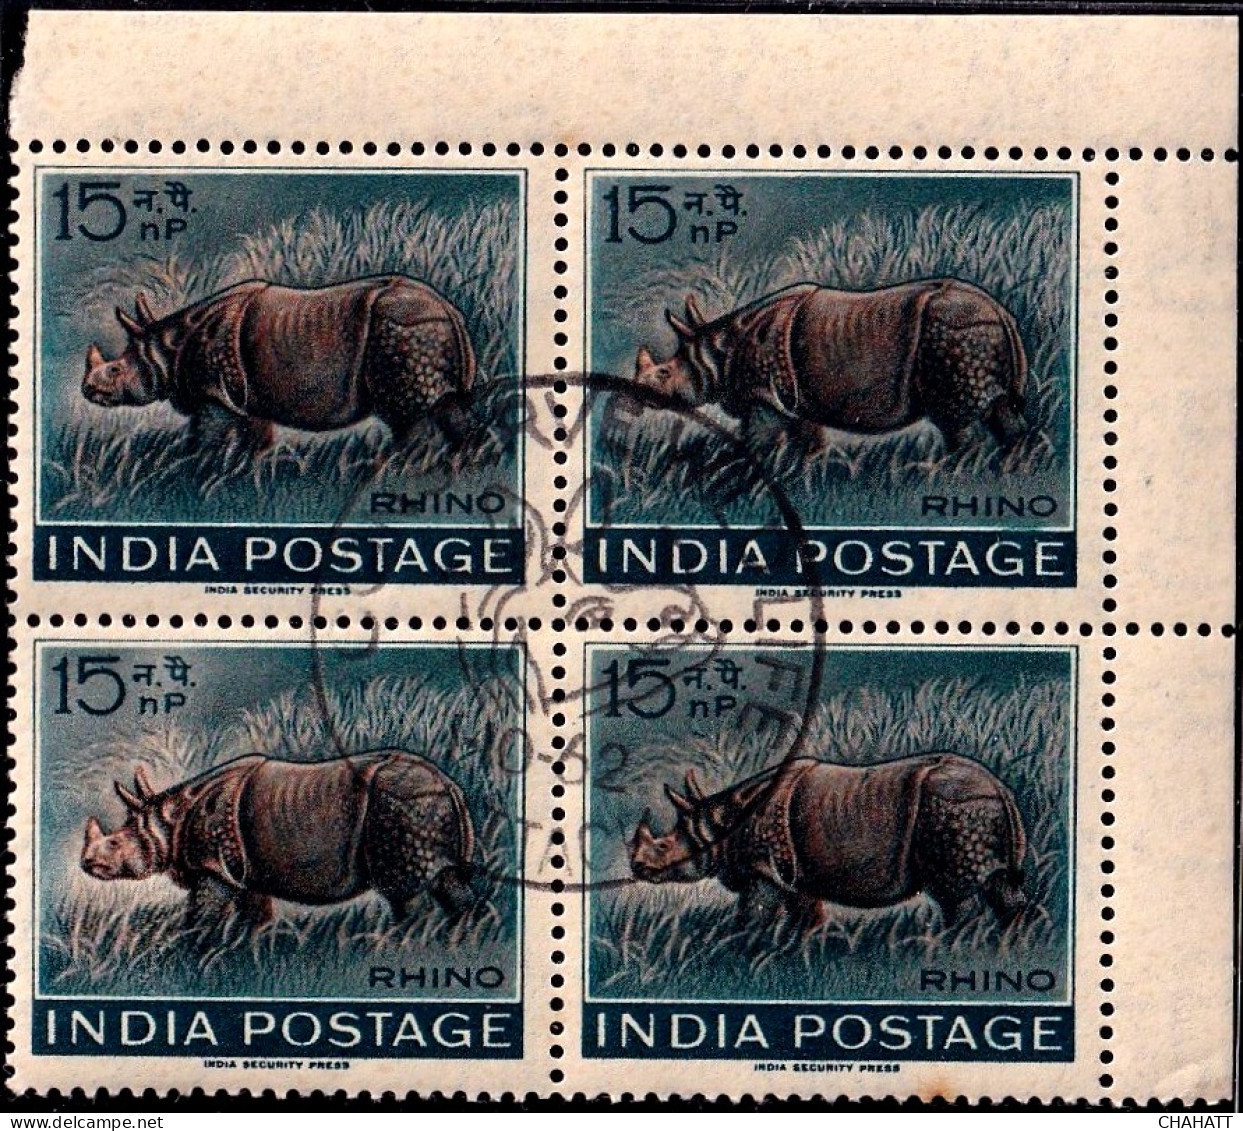 INDIA-1962- WILDLIFE WEEK- RHINOCEROS- BLOCK OF 4 WITH PICTORIAL CANCEL- ERROR-DRY PRINT-"BHARAT" OMITTED-MNH-IE-66-2 - Variedades Y Curiosidades